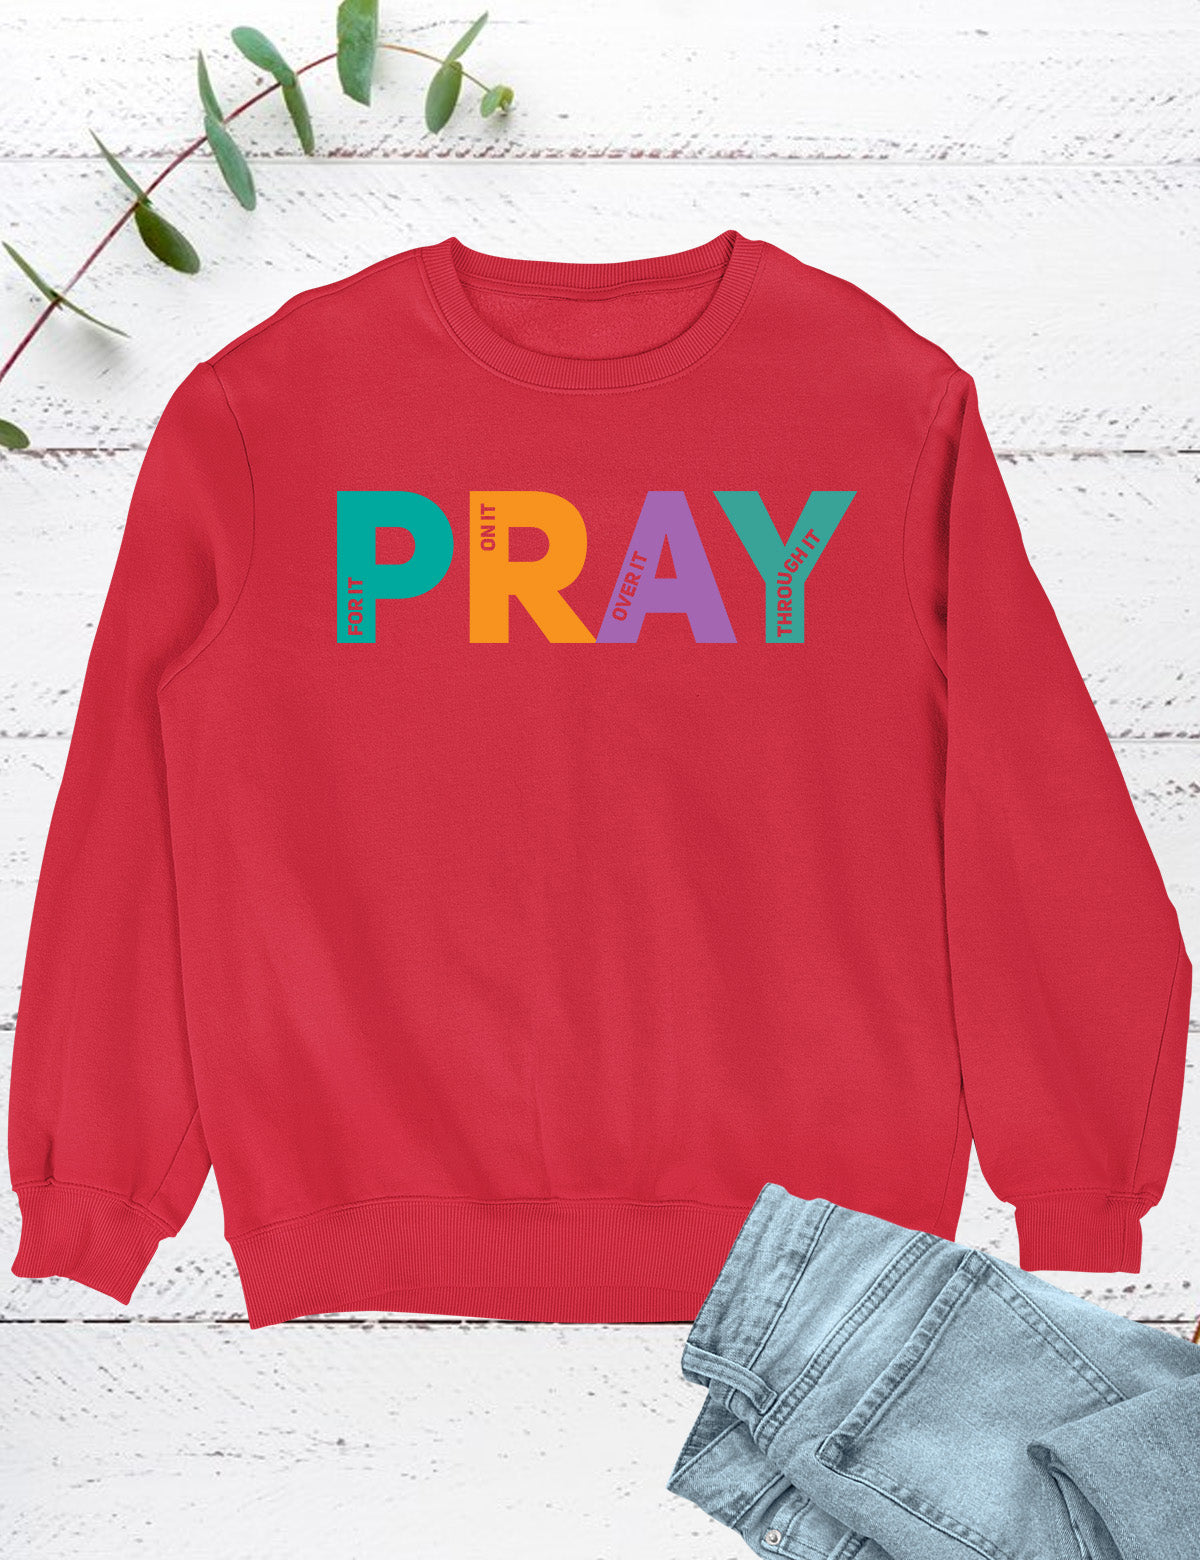 Pray on it Pray over it Pray Through it Sweatshirt